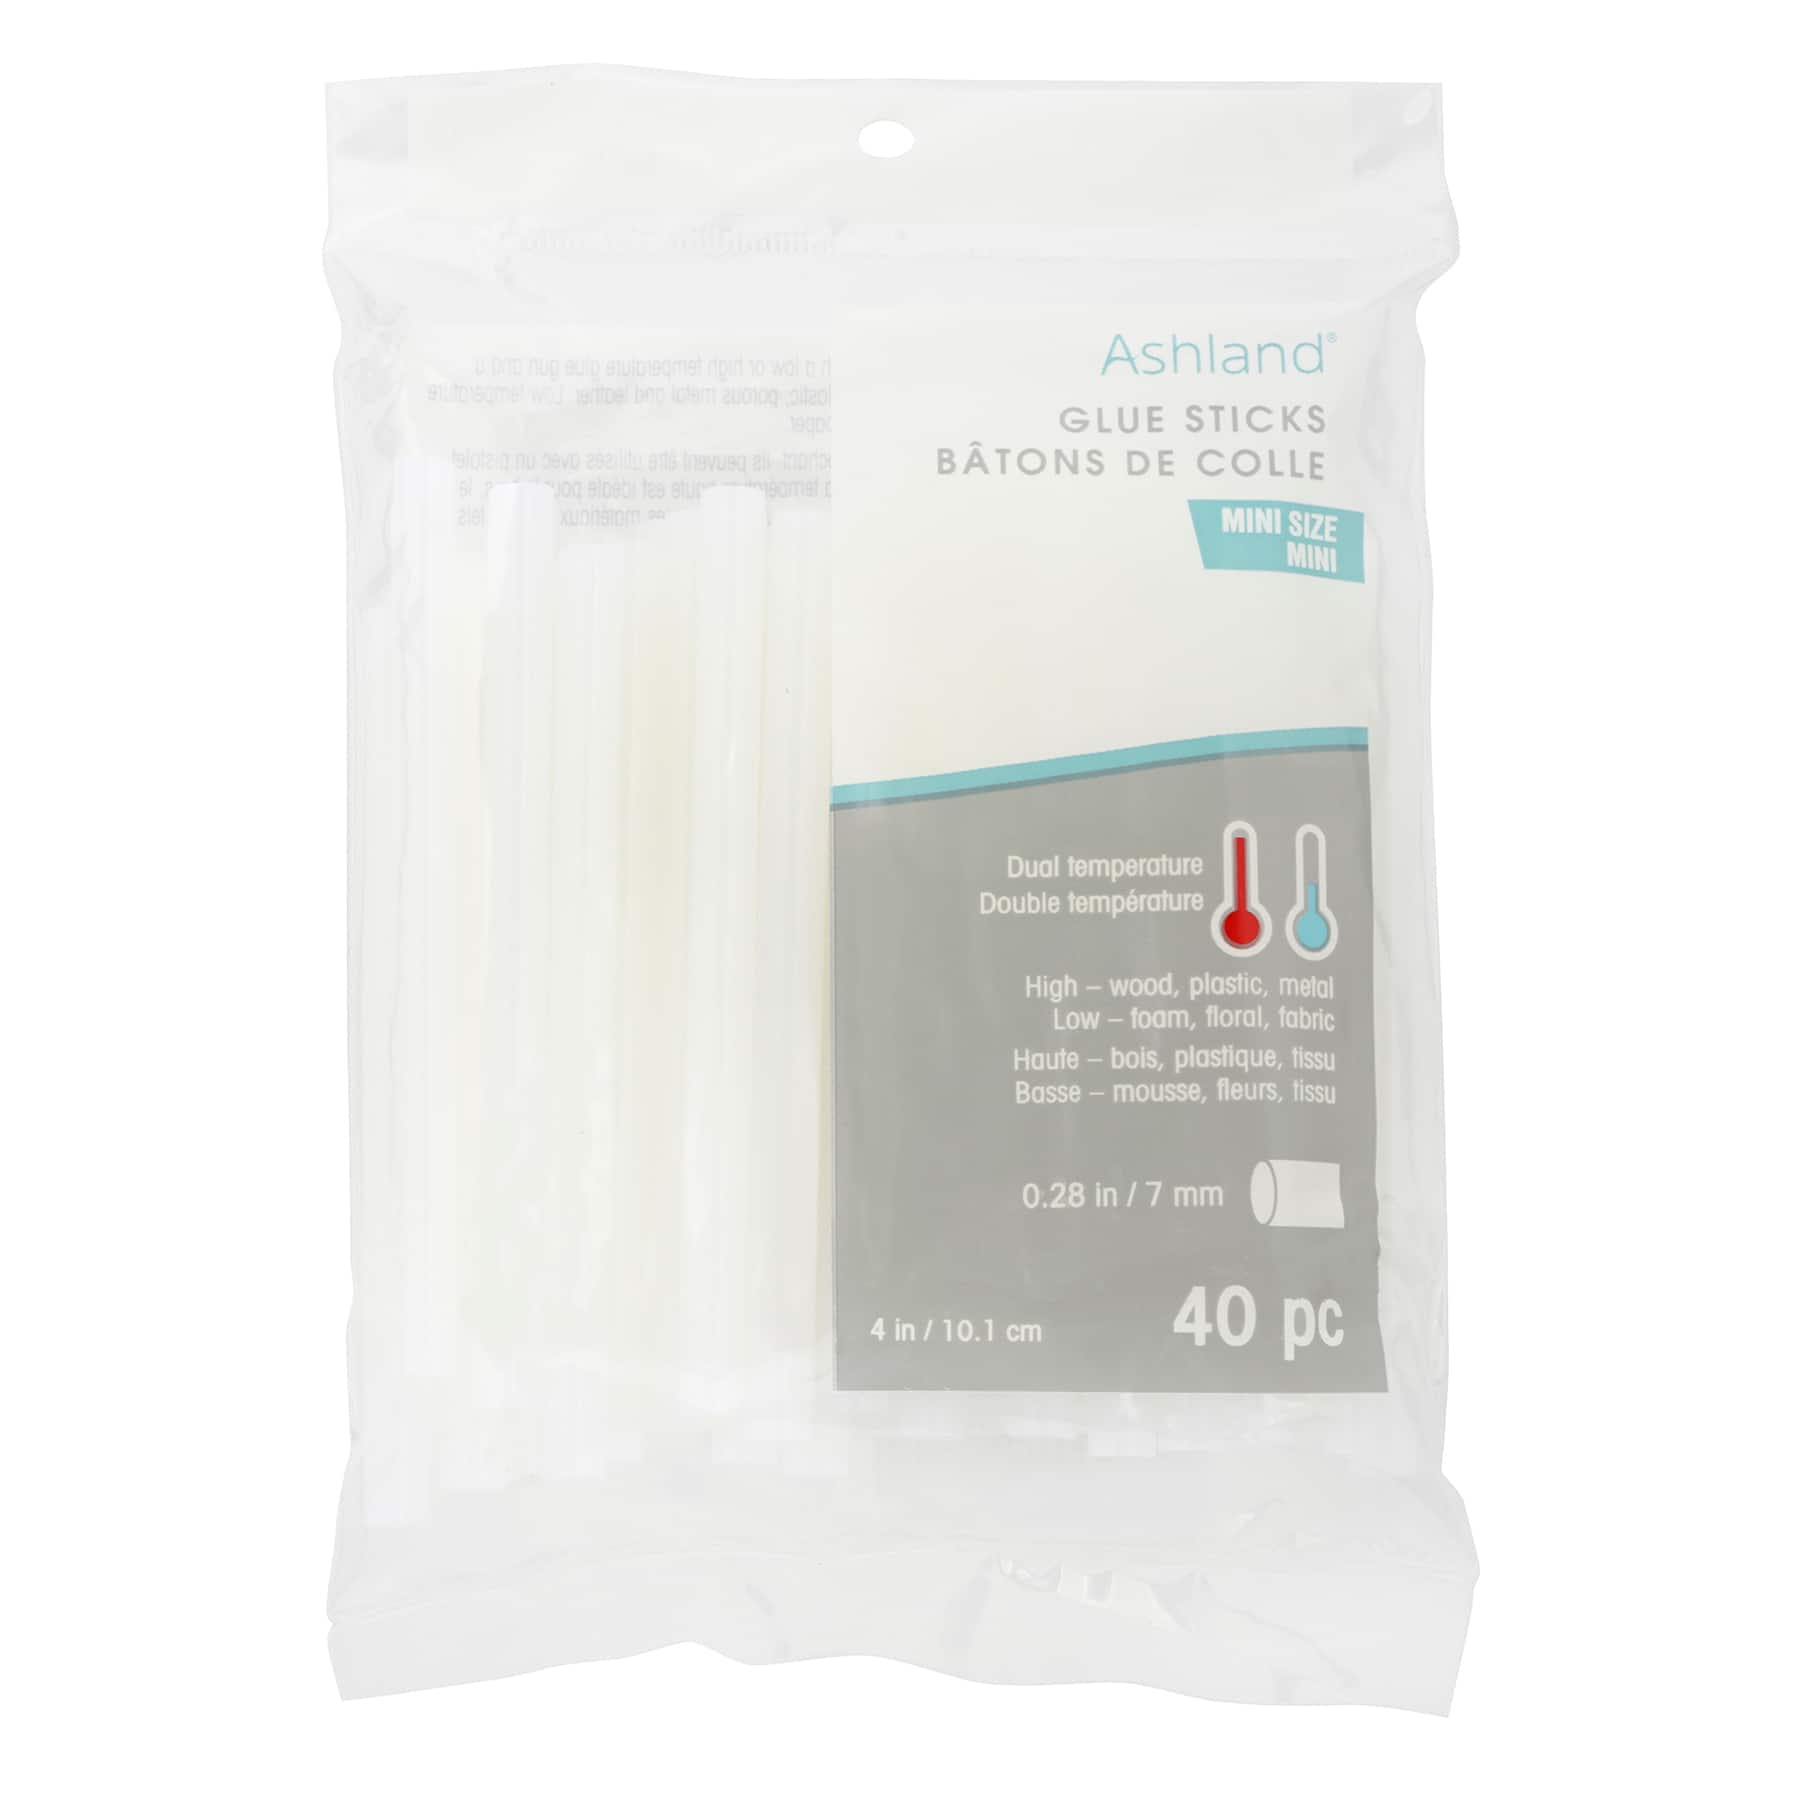 4 Mini Dual Temperature Glue Sticks by Ashland®